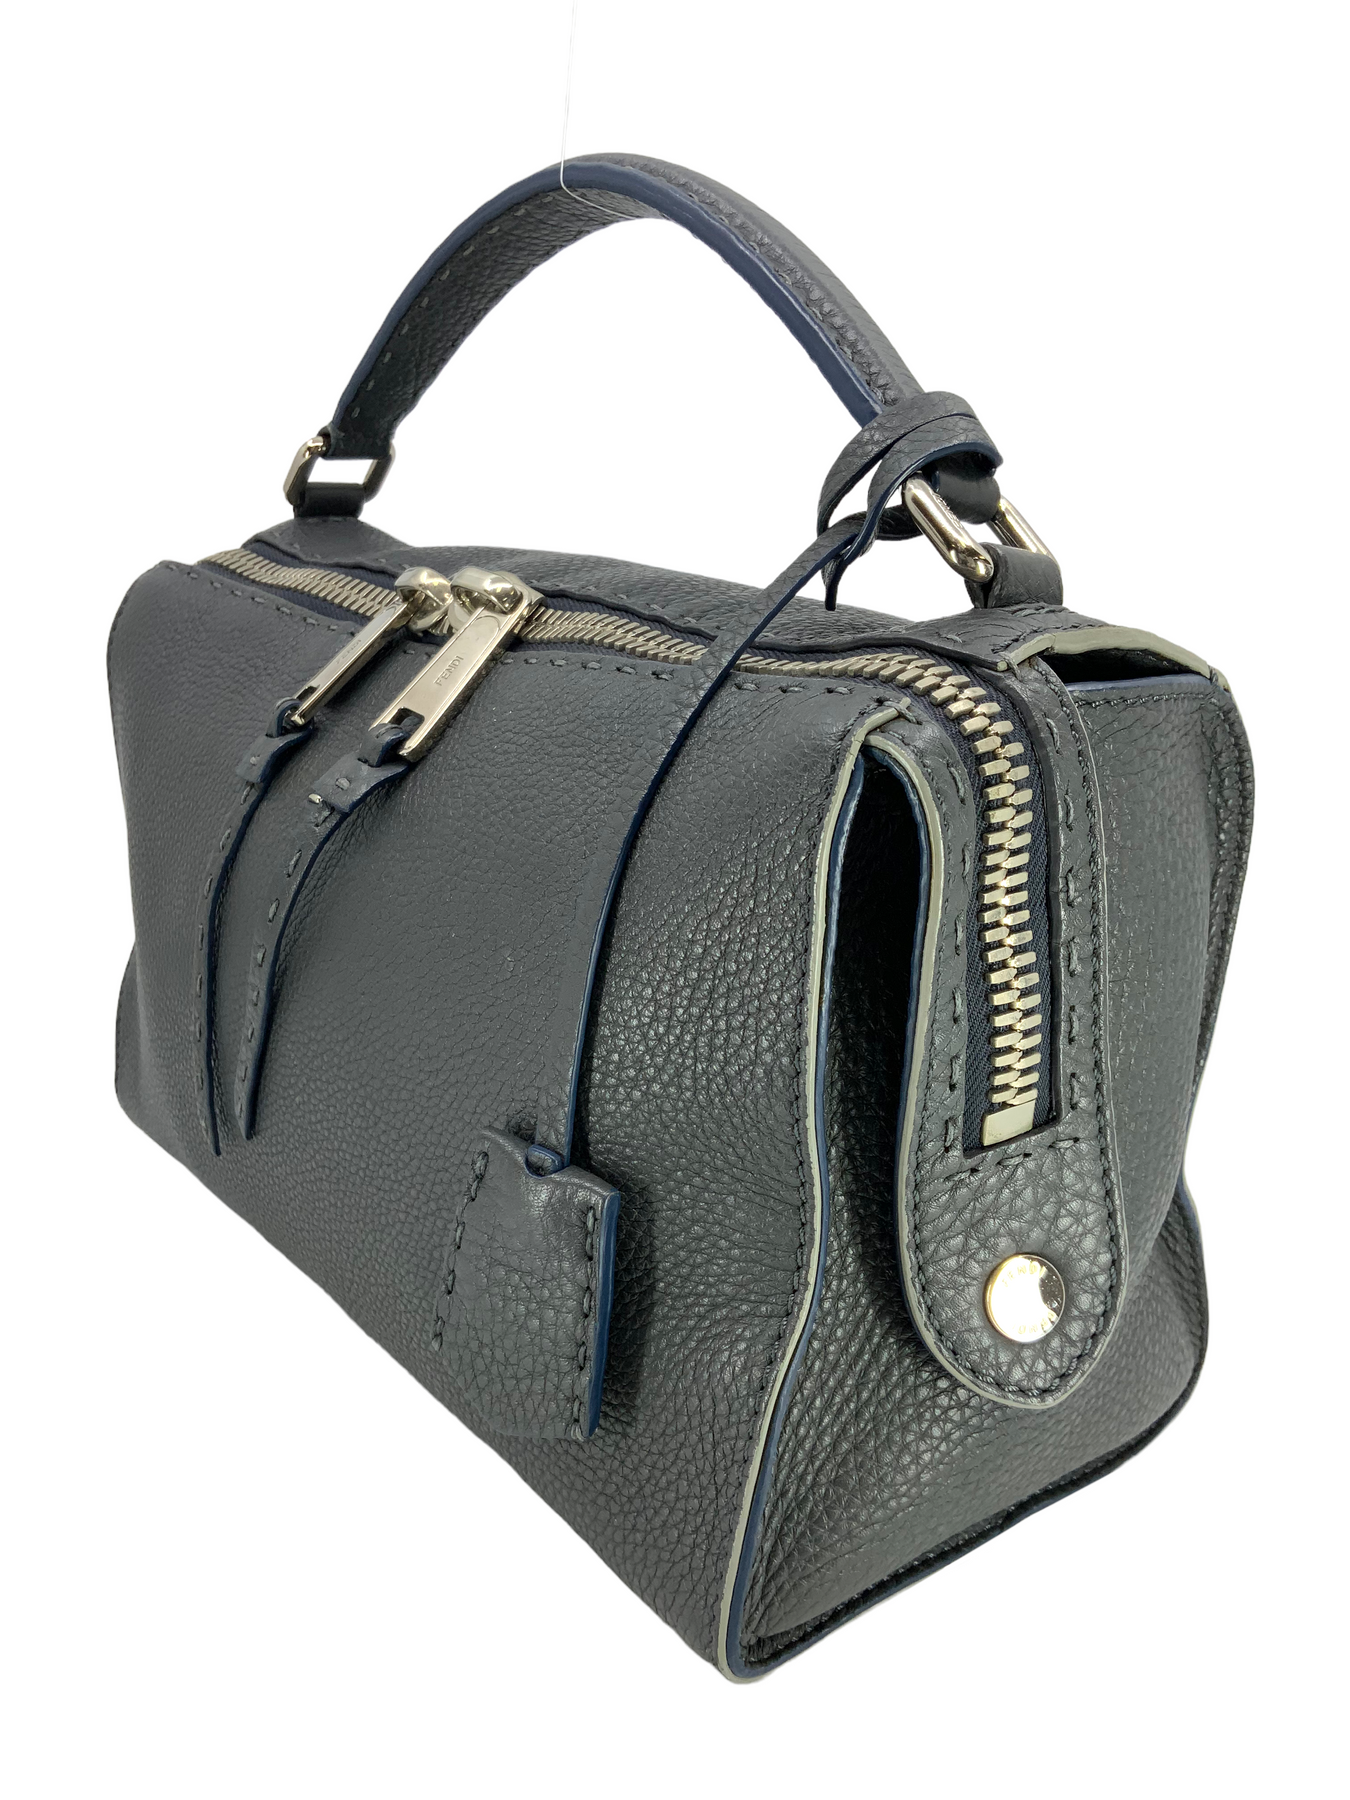 Fendi Brown Leather Selleria Boston Bag 824ff54 For Sale at